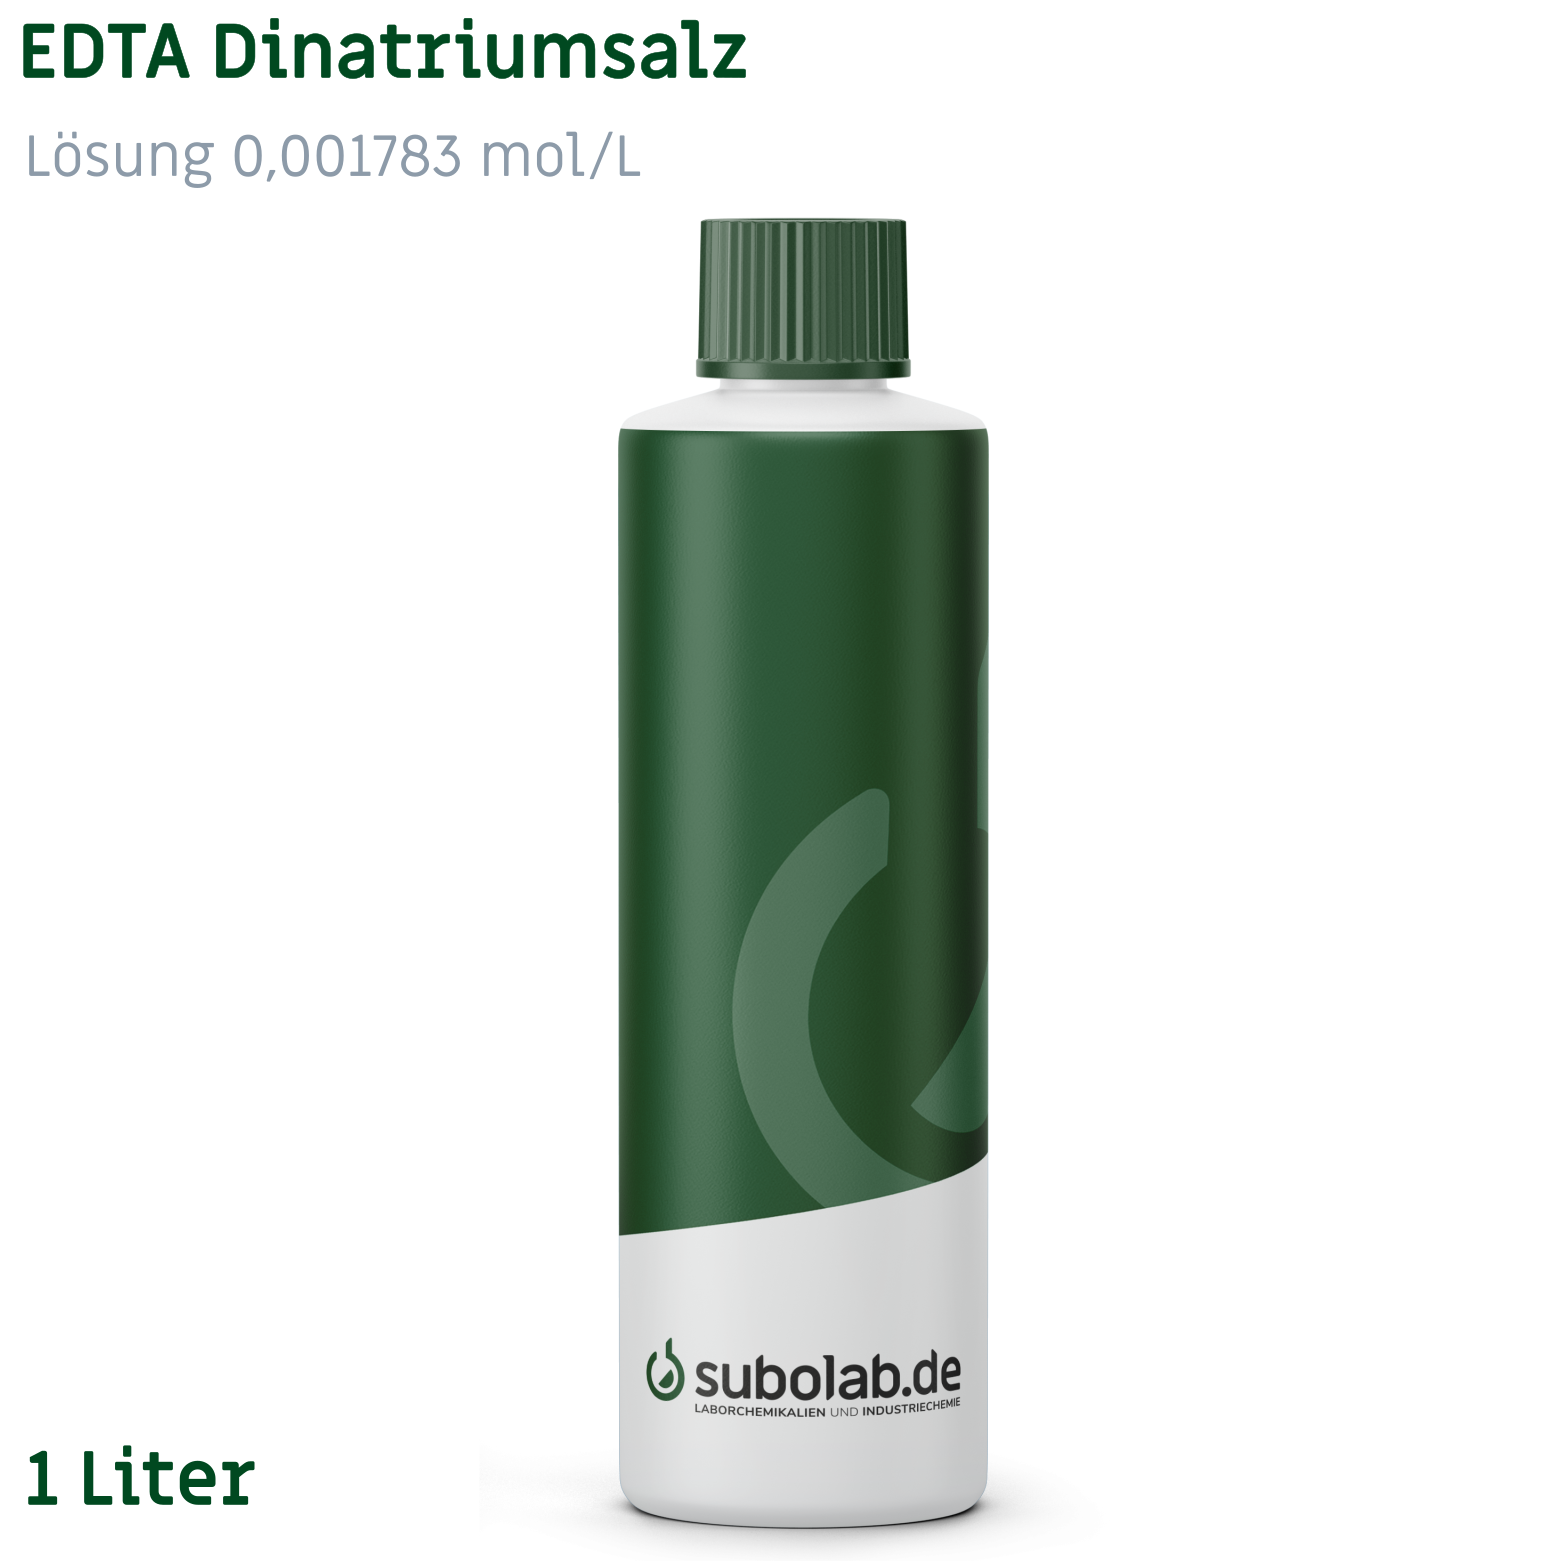 Bild von EDTA Dinatriumsalz Lösung 0,001783 mol/L (1 Liter)